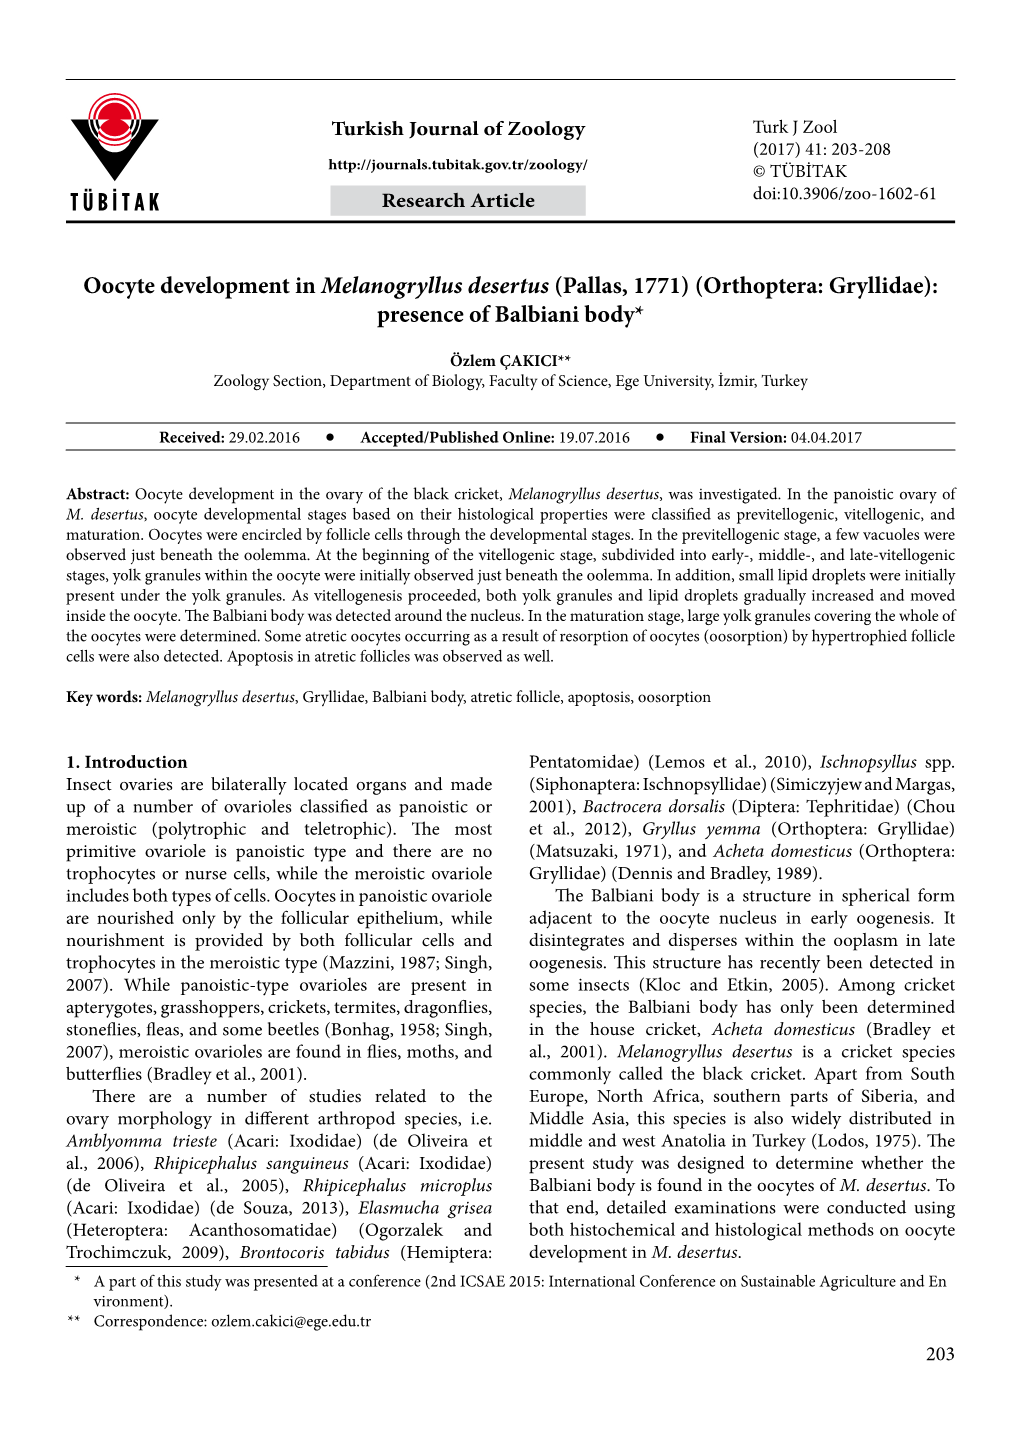 Oocyte Development in Melanogryllus Desertus (Pallas, 1771) (Orthoptera: Gryllidae): Presence of Balbiani Body*